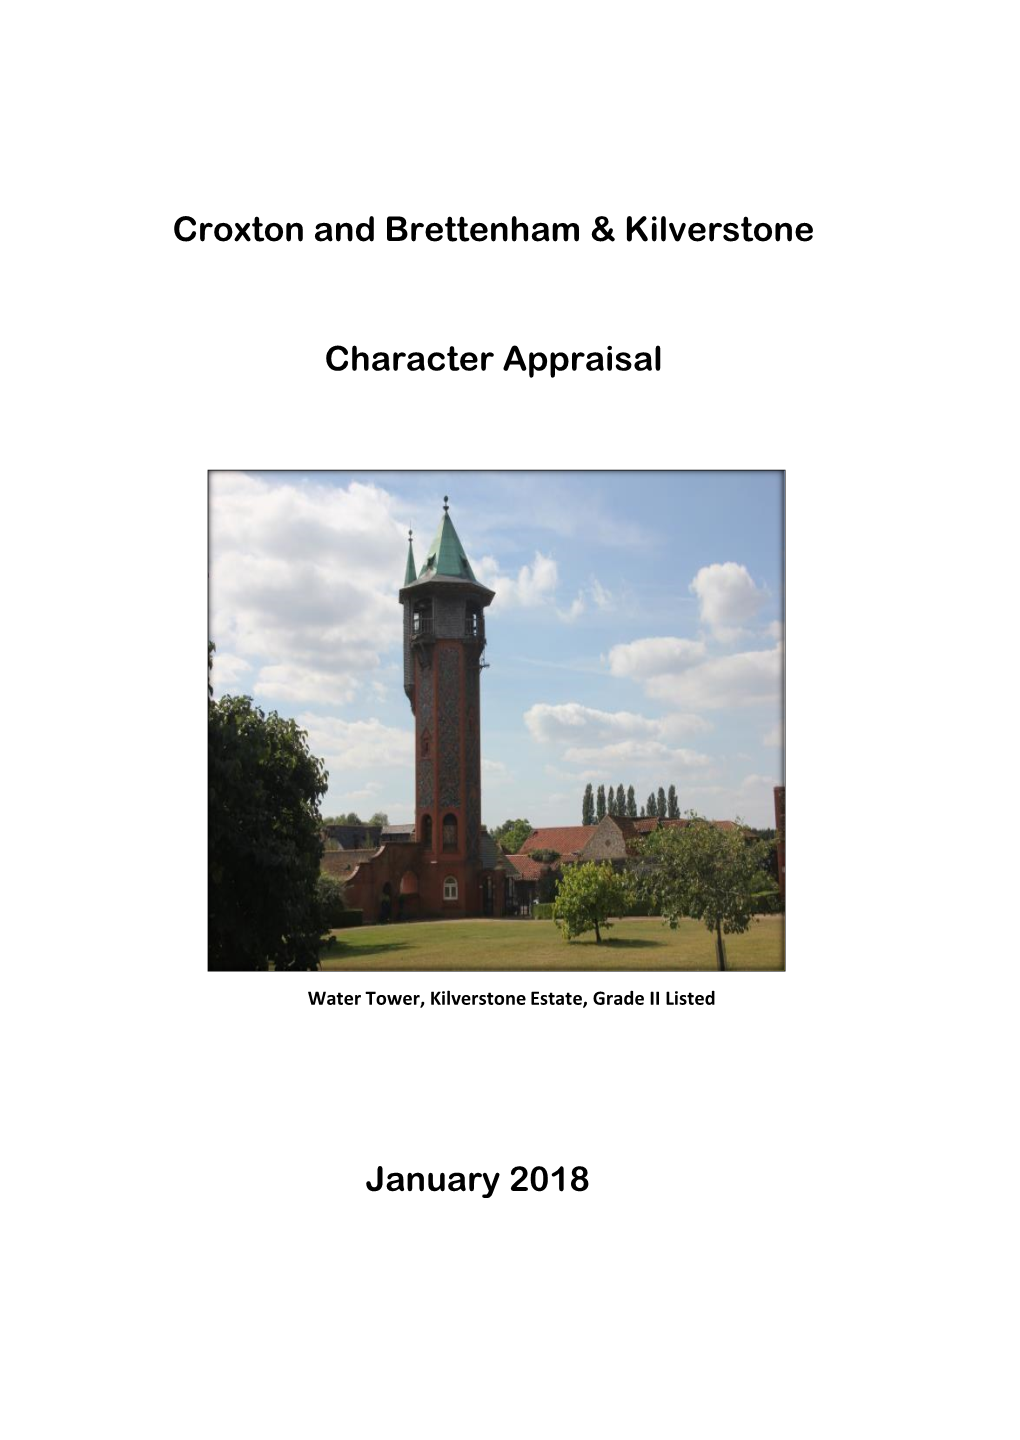 Croxton and Brettenham & Kilverstone Character Appraisal January 2018